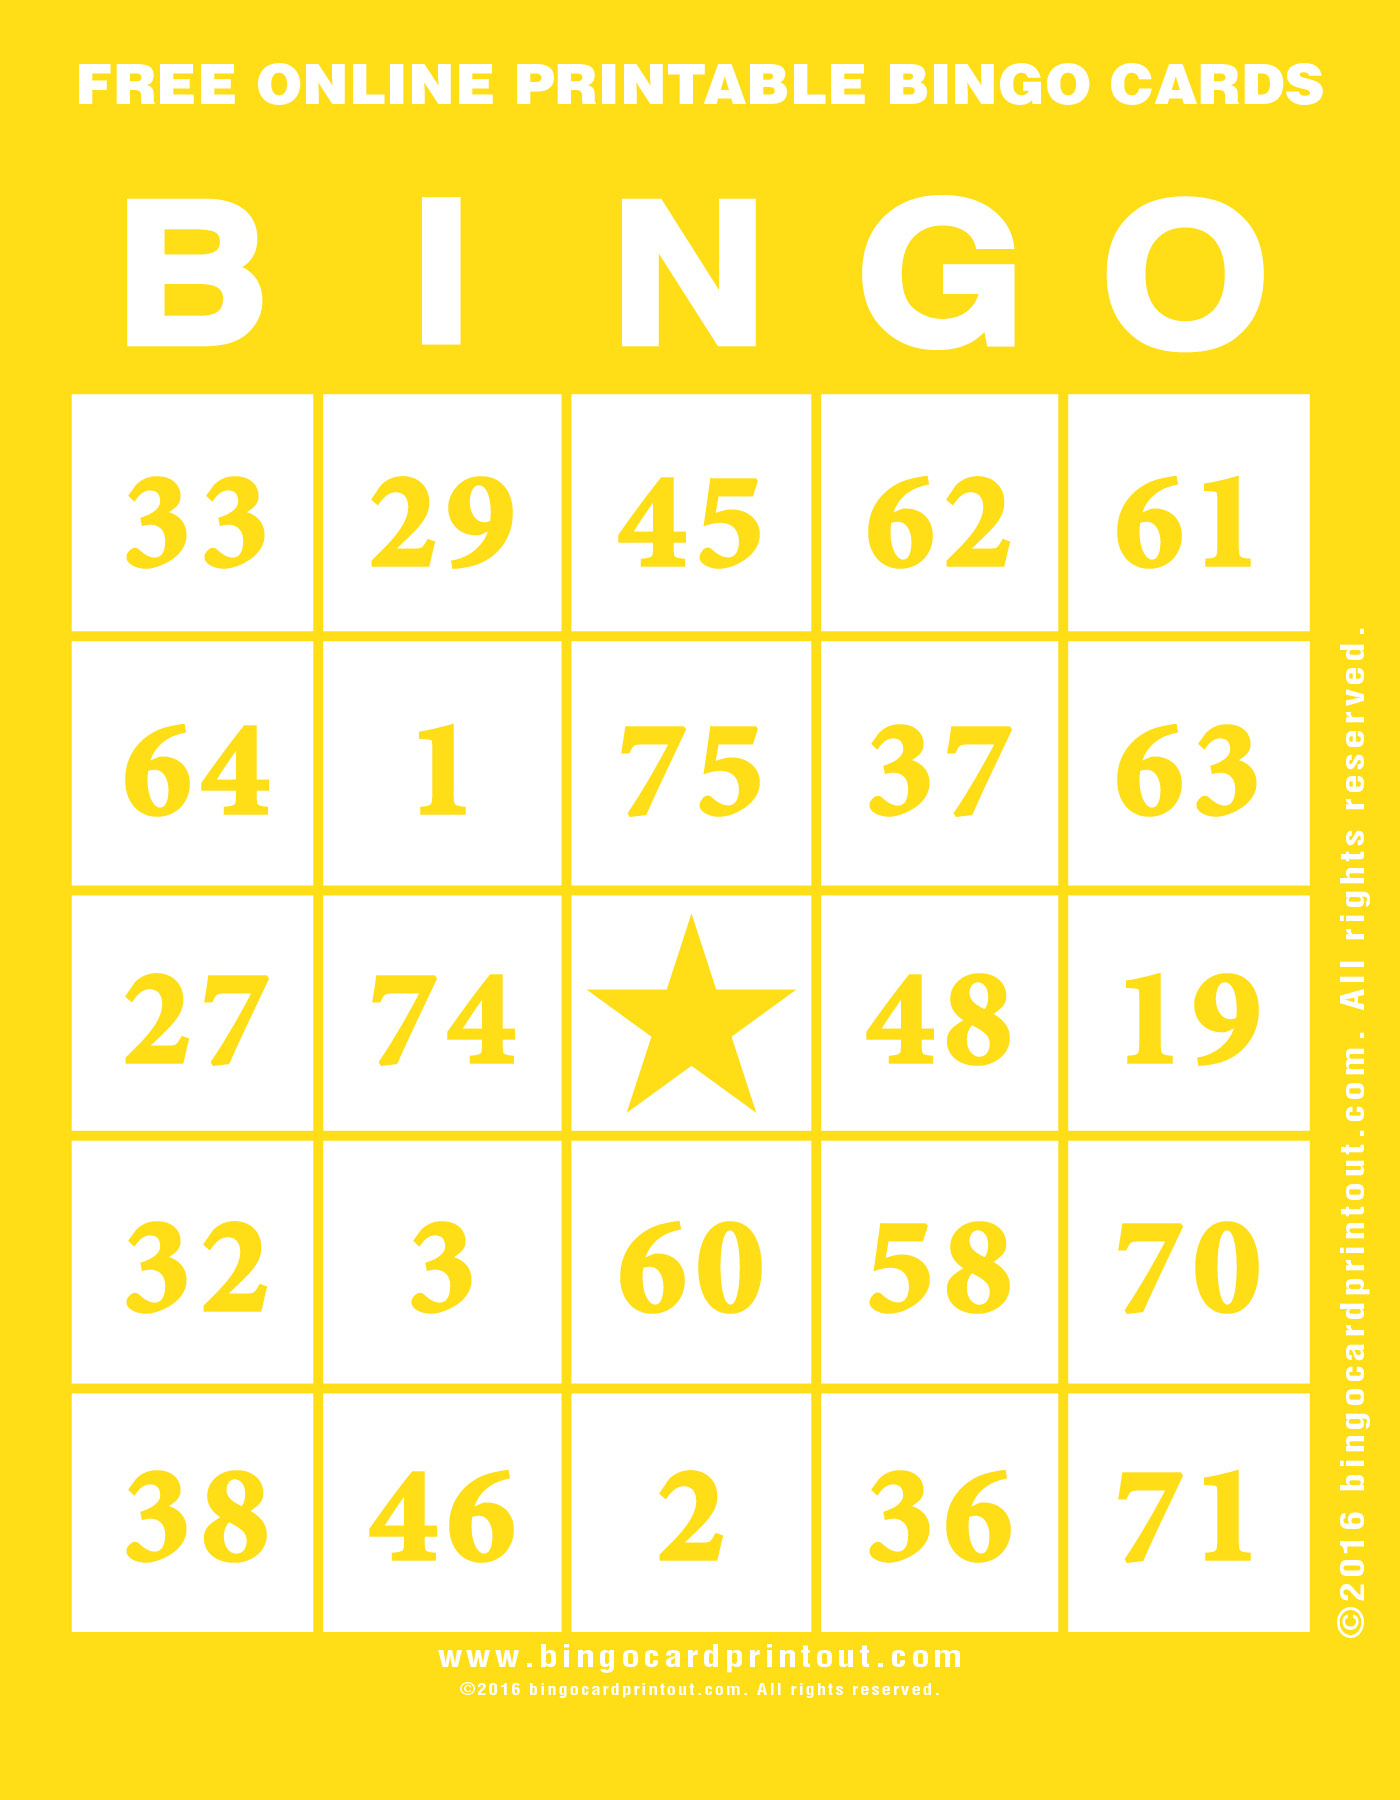 Free Online Printable Bingo Cards - Bingocardprintout